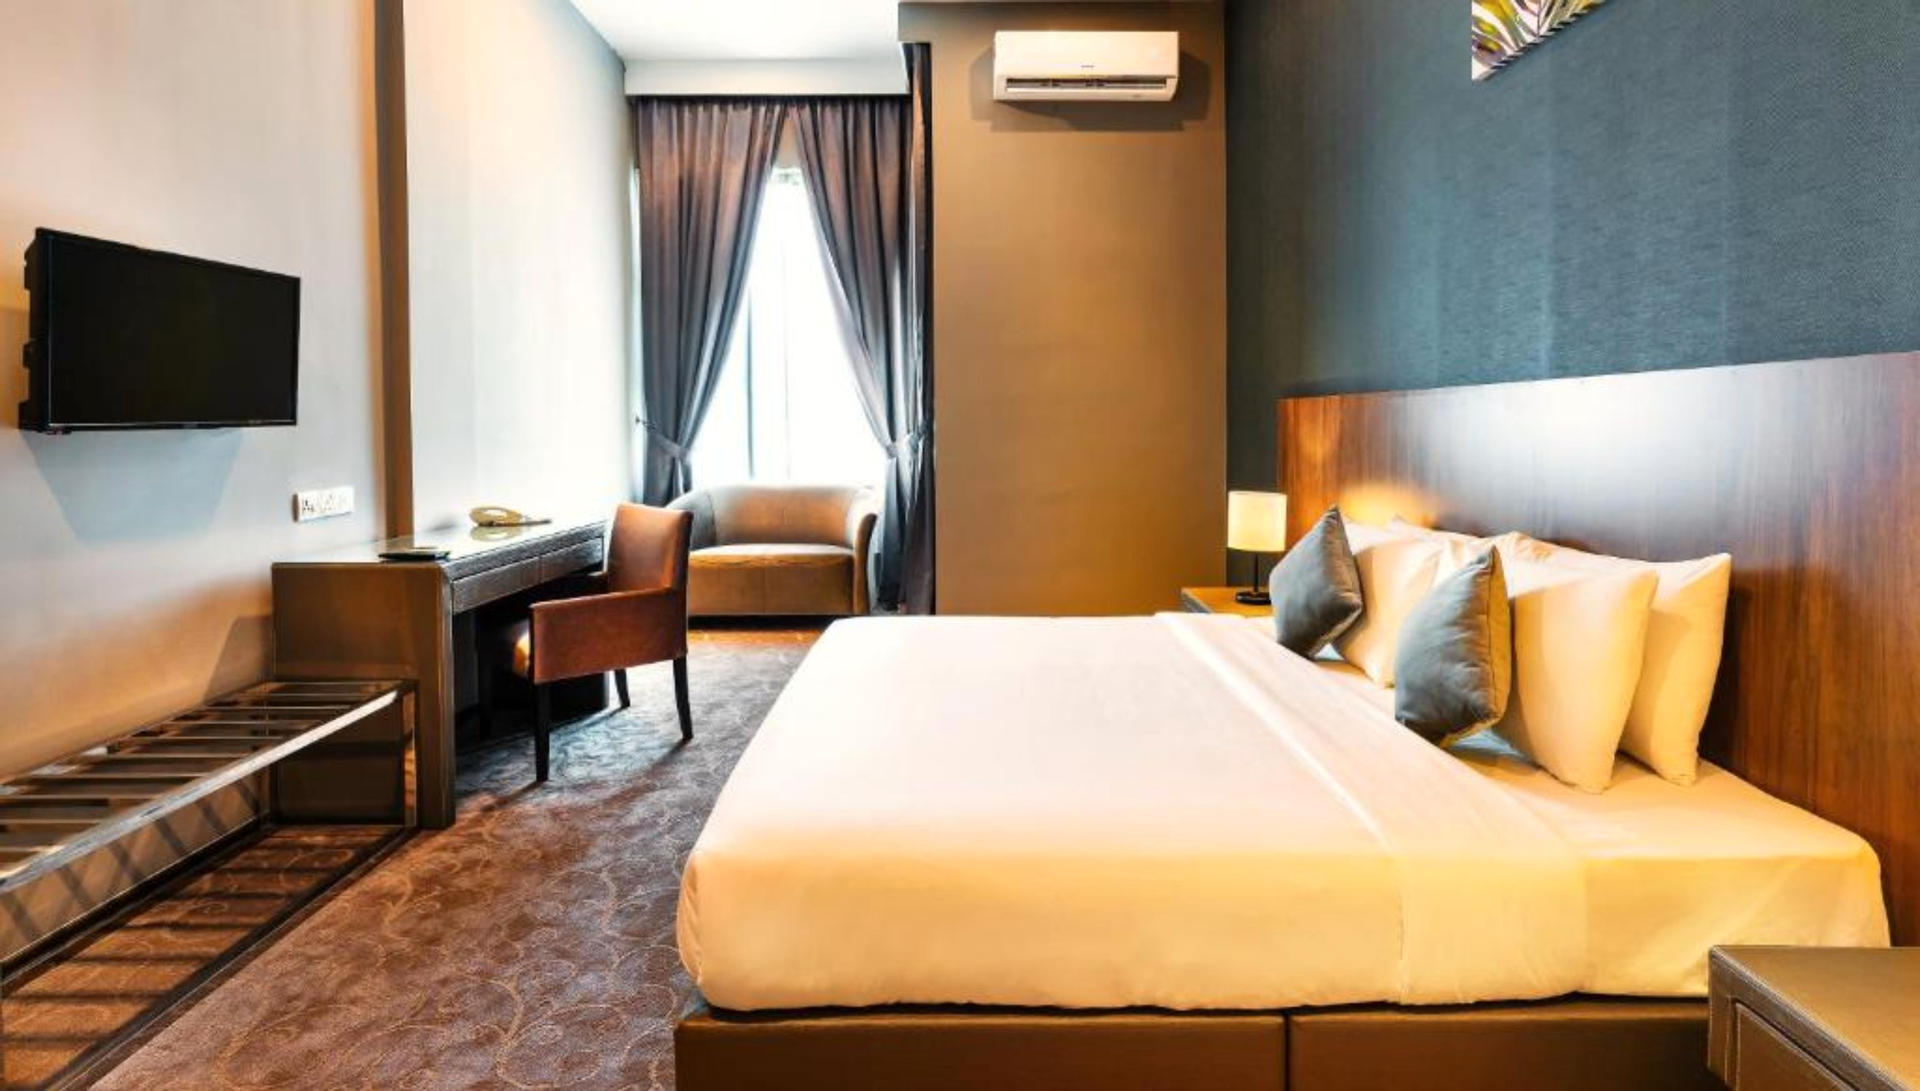 Bedroom 3, Le'venue Hotel, Hulu Langat